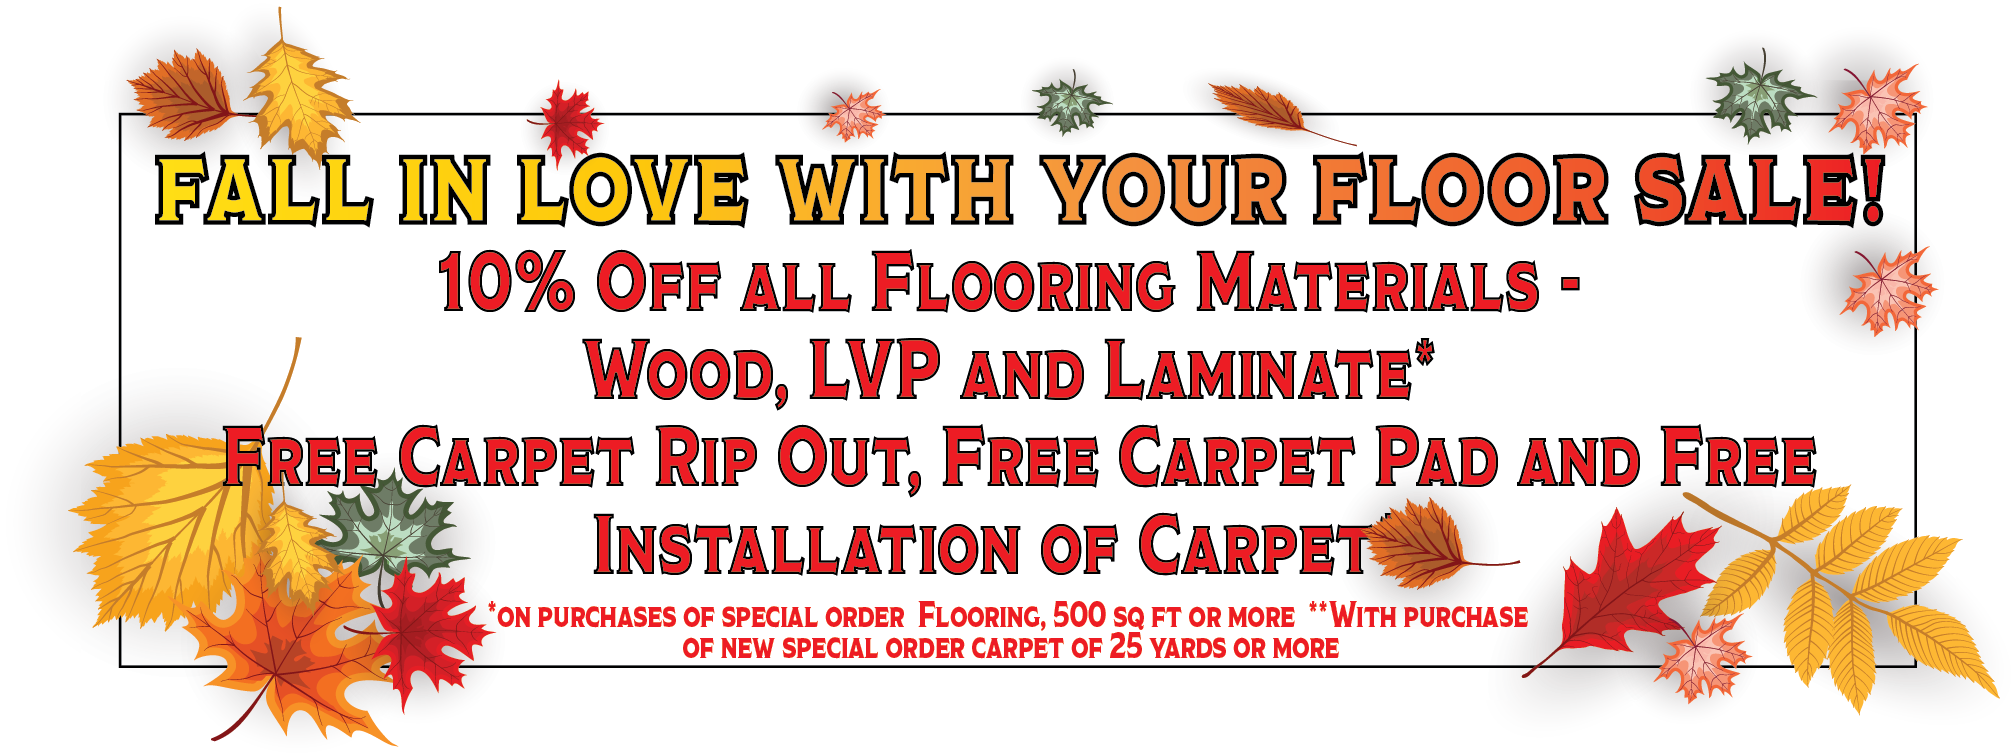 Carpet sale, flooring sale, carpet financing, flooring financing